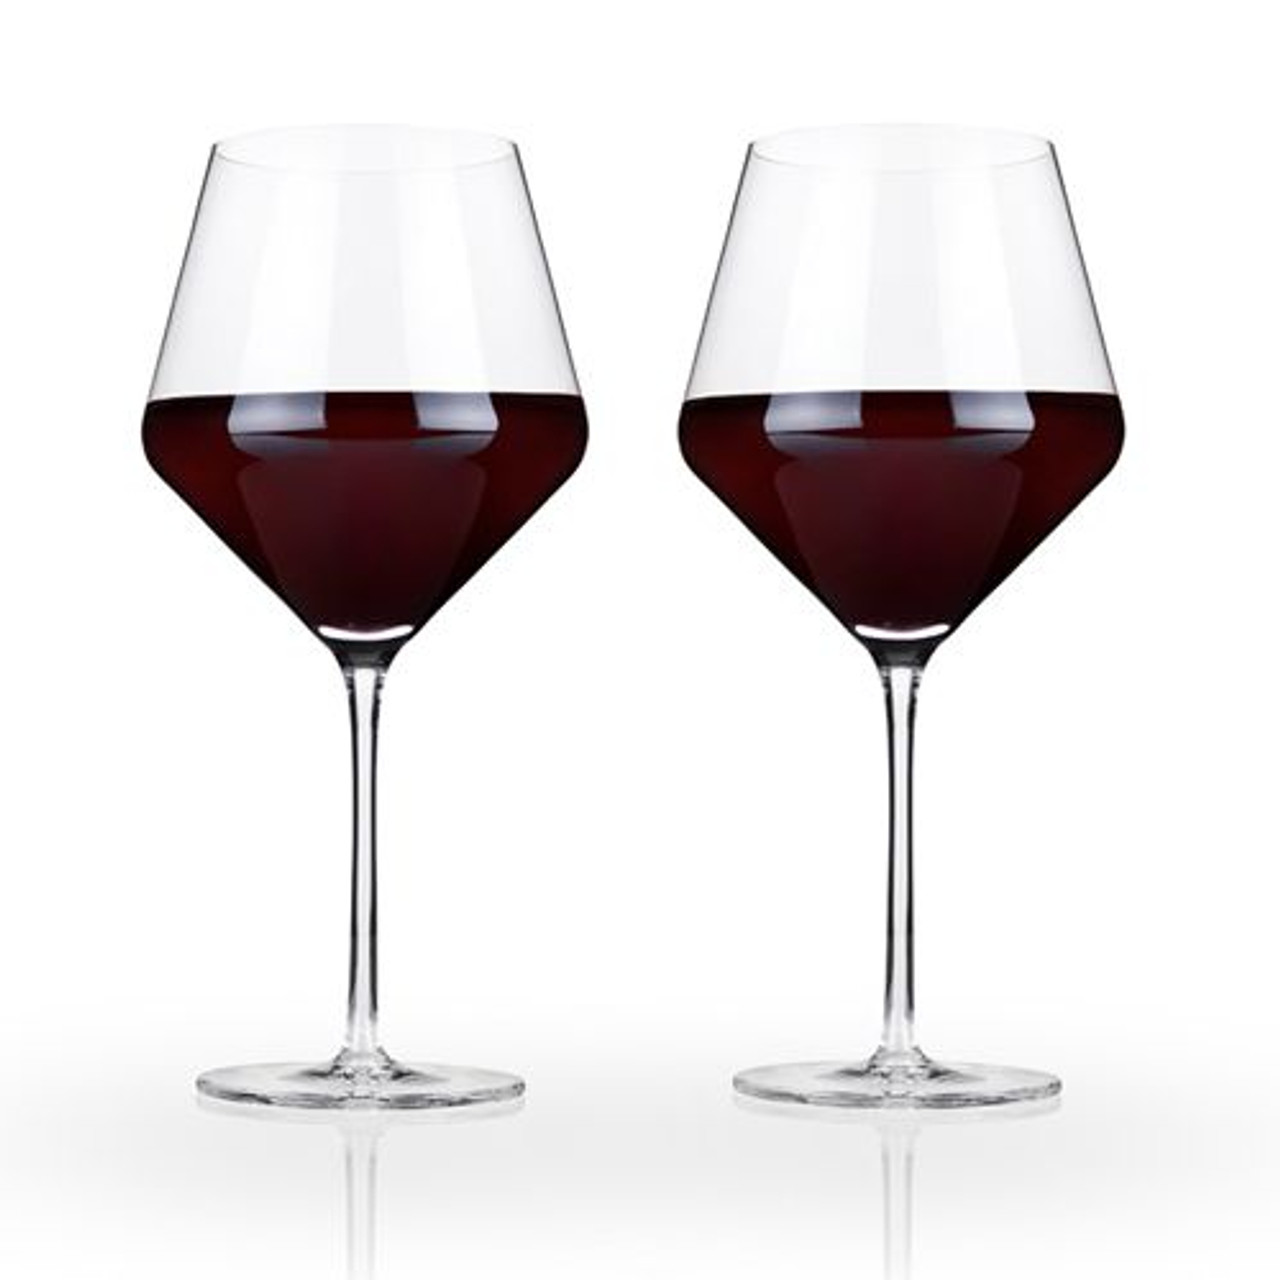 https://cdn11.bigcommerce.com/s-cznxq08r7/images/stencil/1280x1280/products/3289/806/4532-viski-raye-crystal-burgundy-wine-glass-002__77571.1590764504.jpg?c=1